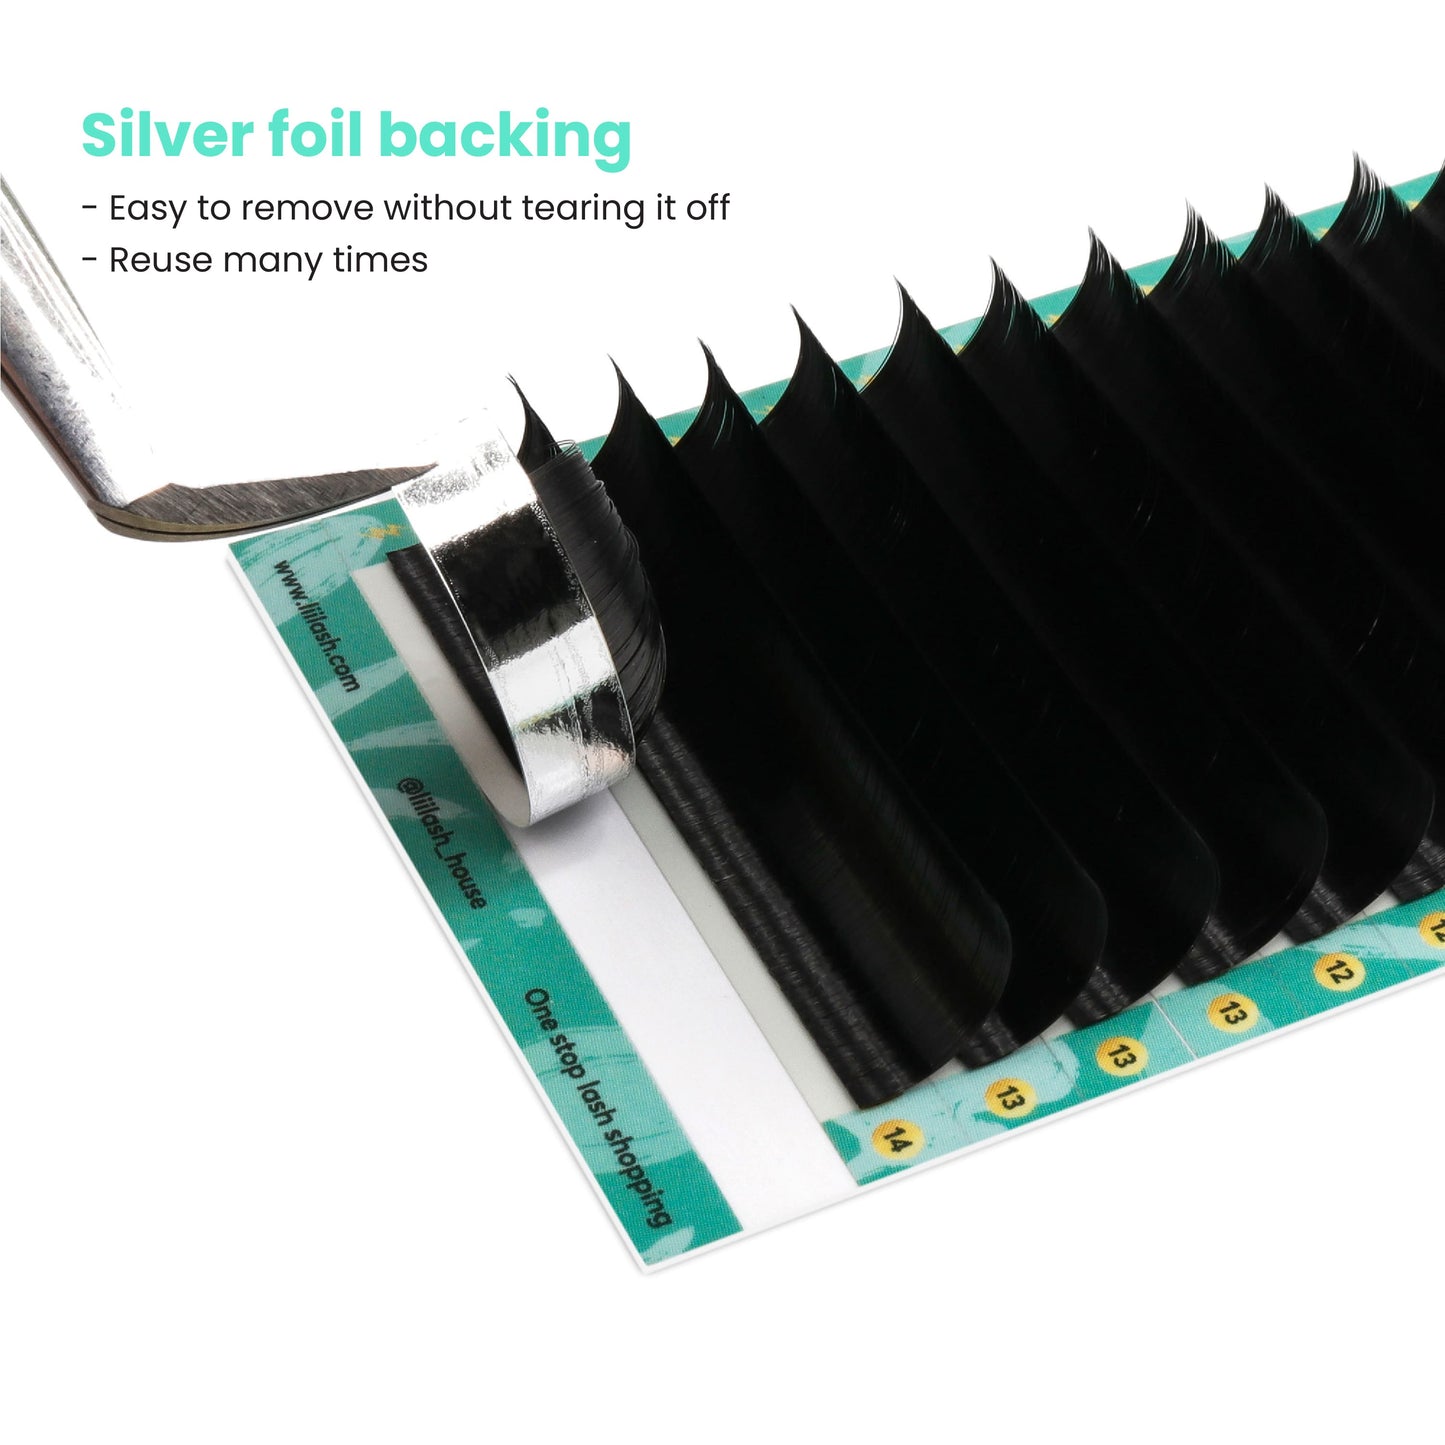 Premium-mink-volume-lashes-0.085mm-Silver-foil-backing